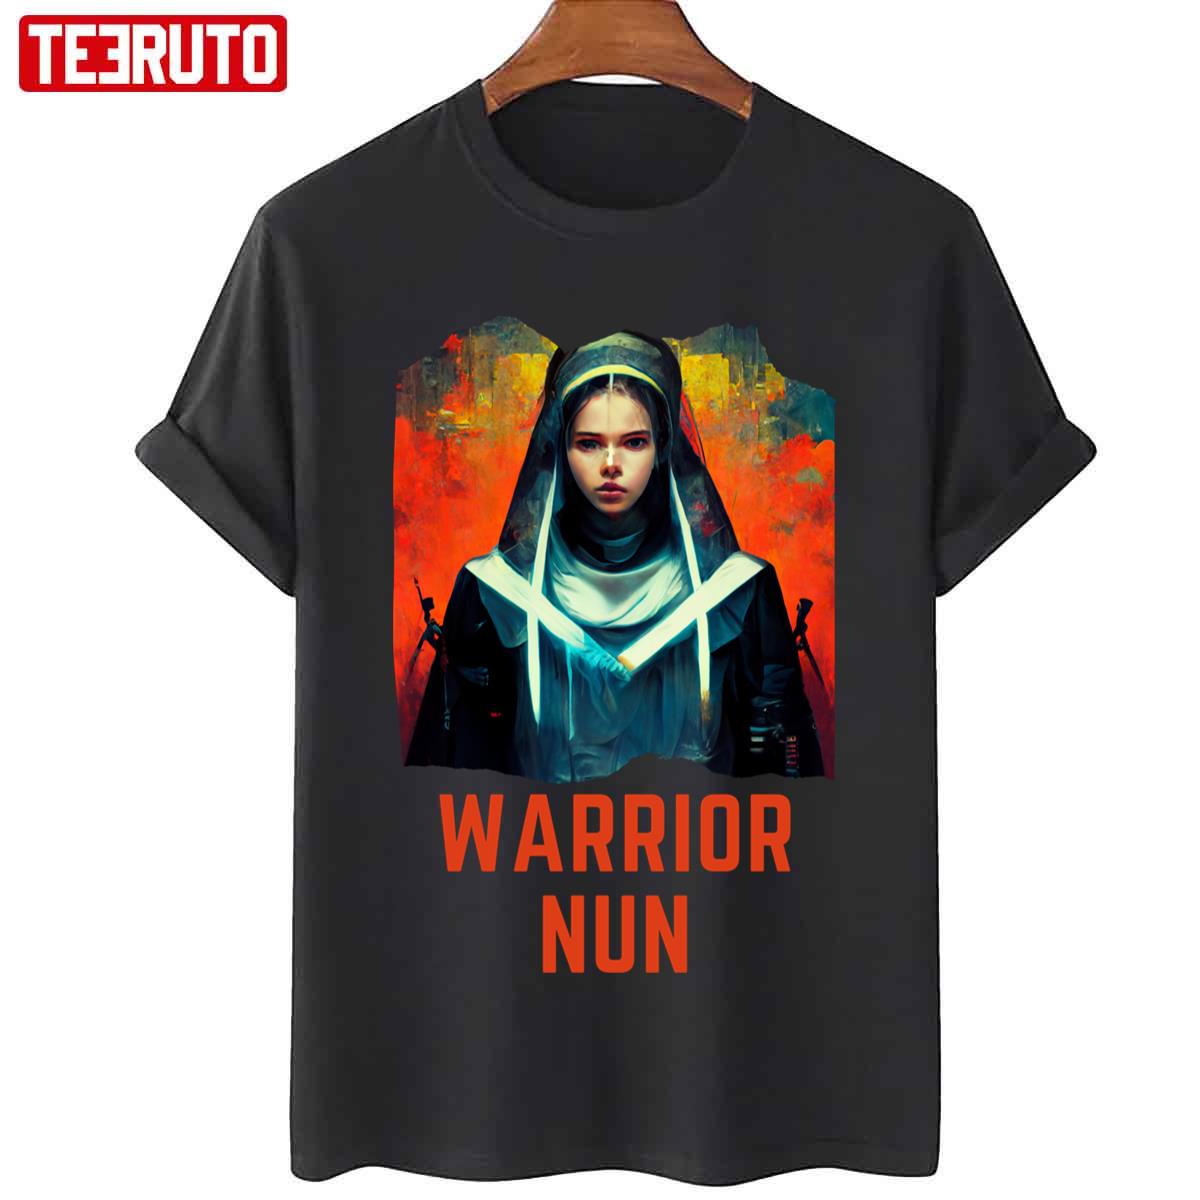 Colored Art Of Warrior Nun Netflix Unisex Sweatshirt